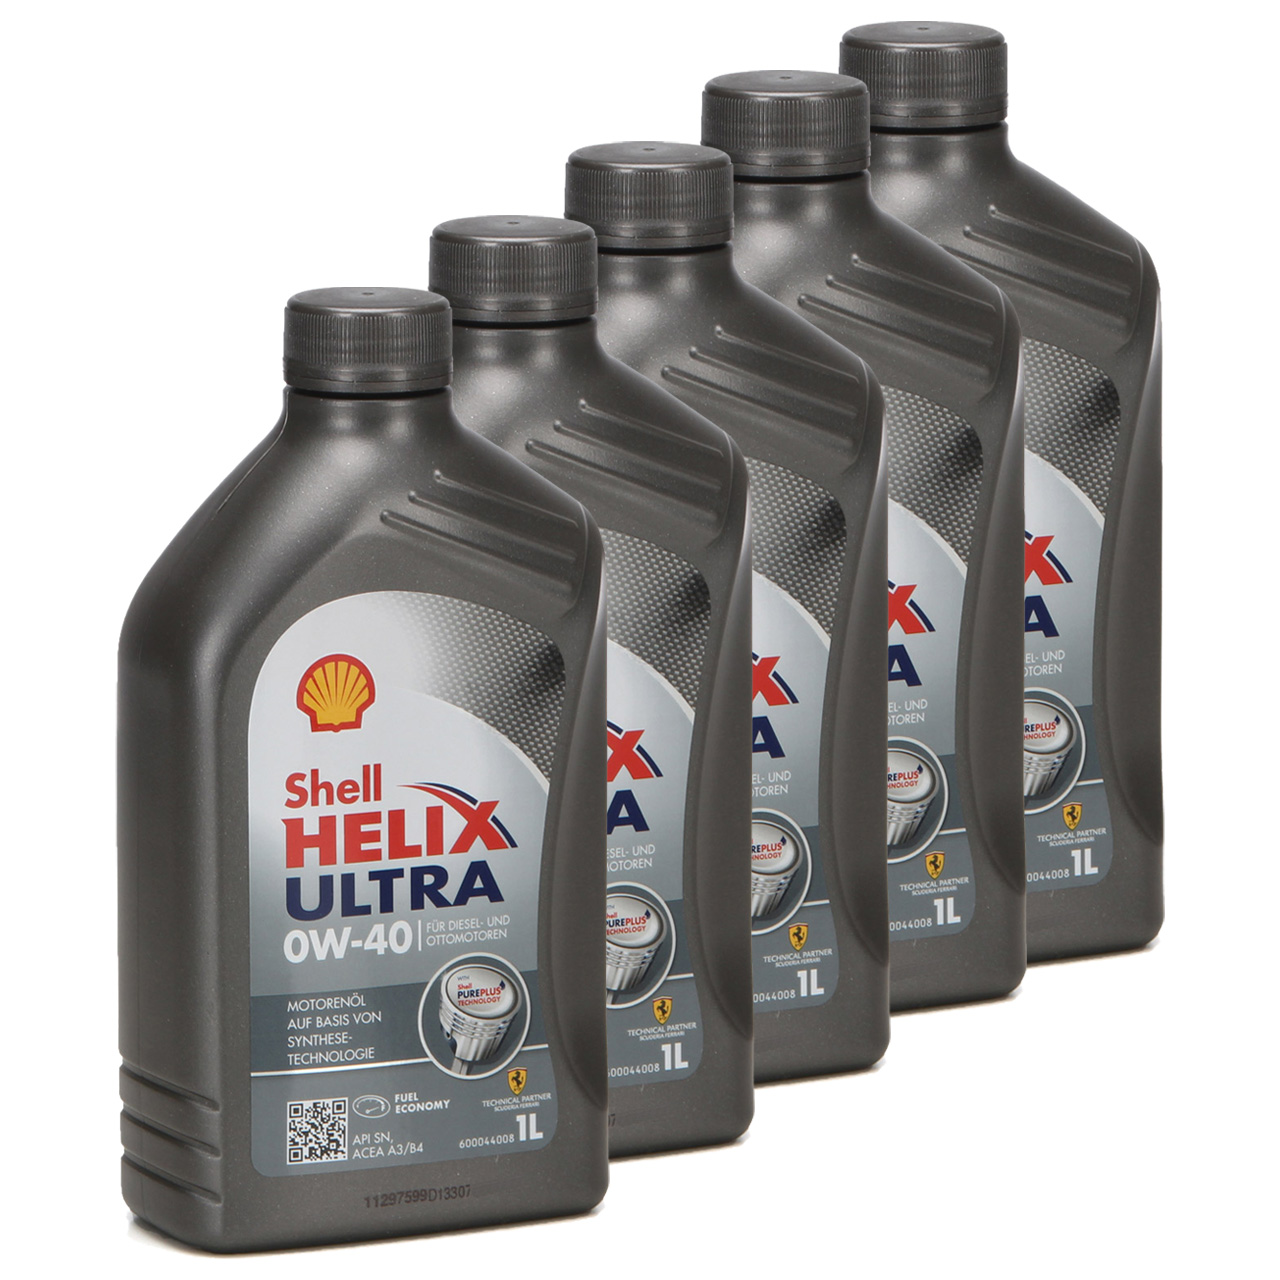 5x 1 Liter SHELL HELIX ULTRA 0W-40 Motoröl Öl MB 229.5/226.5 VW 502.00/505.00